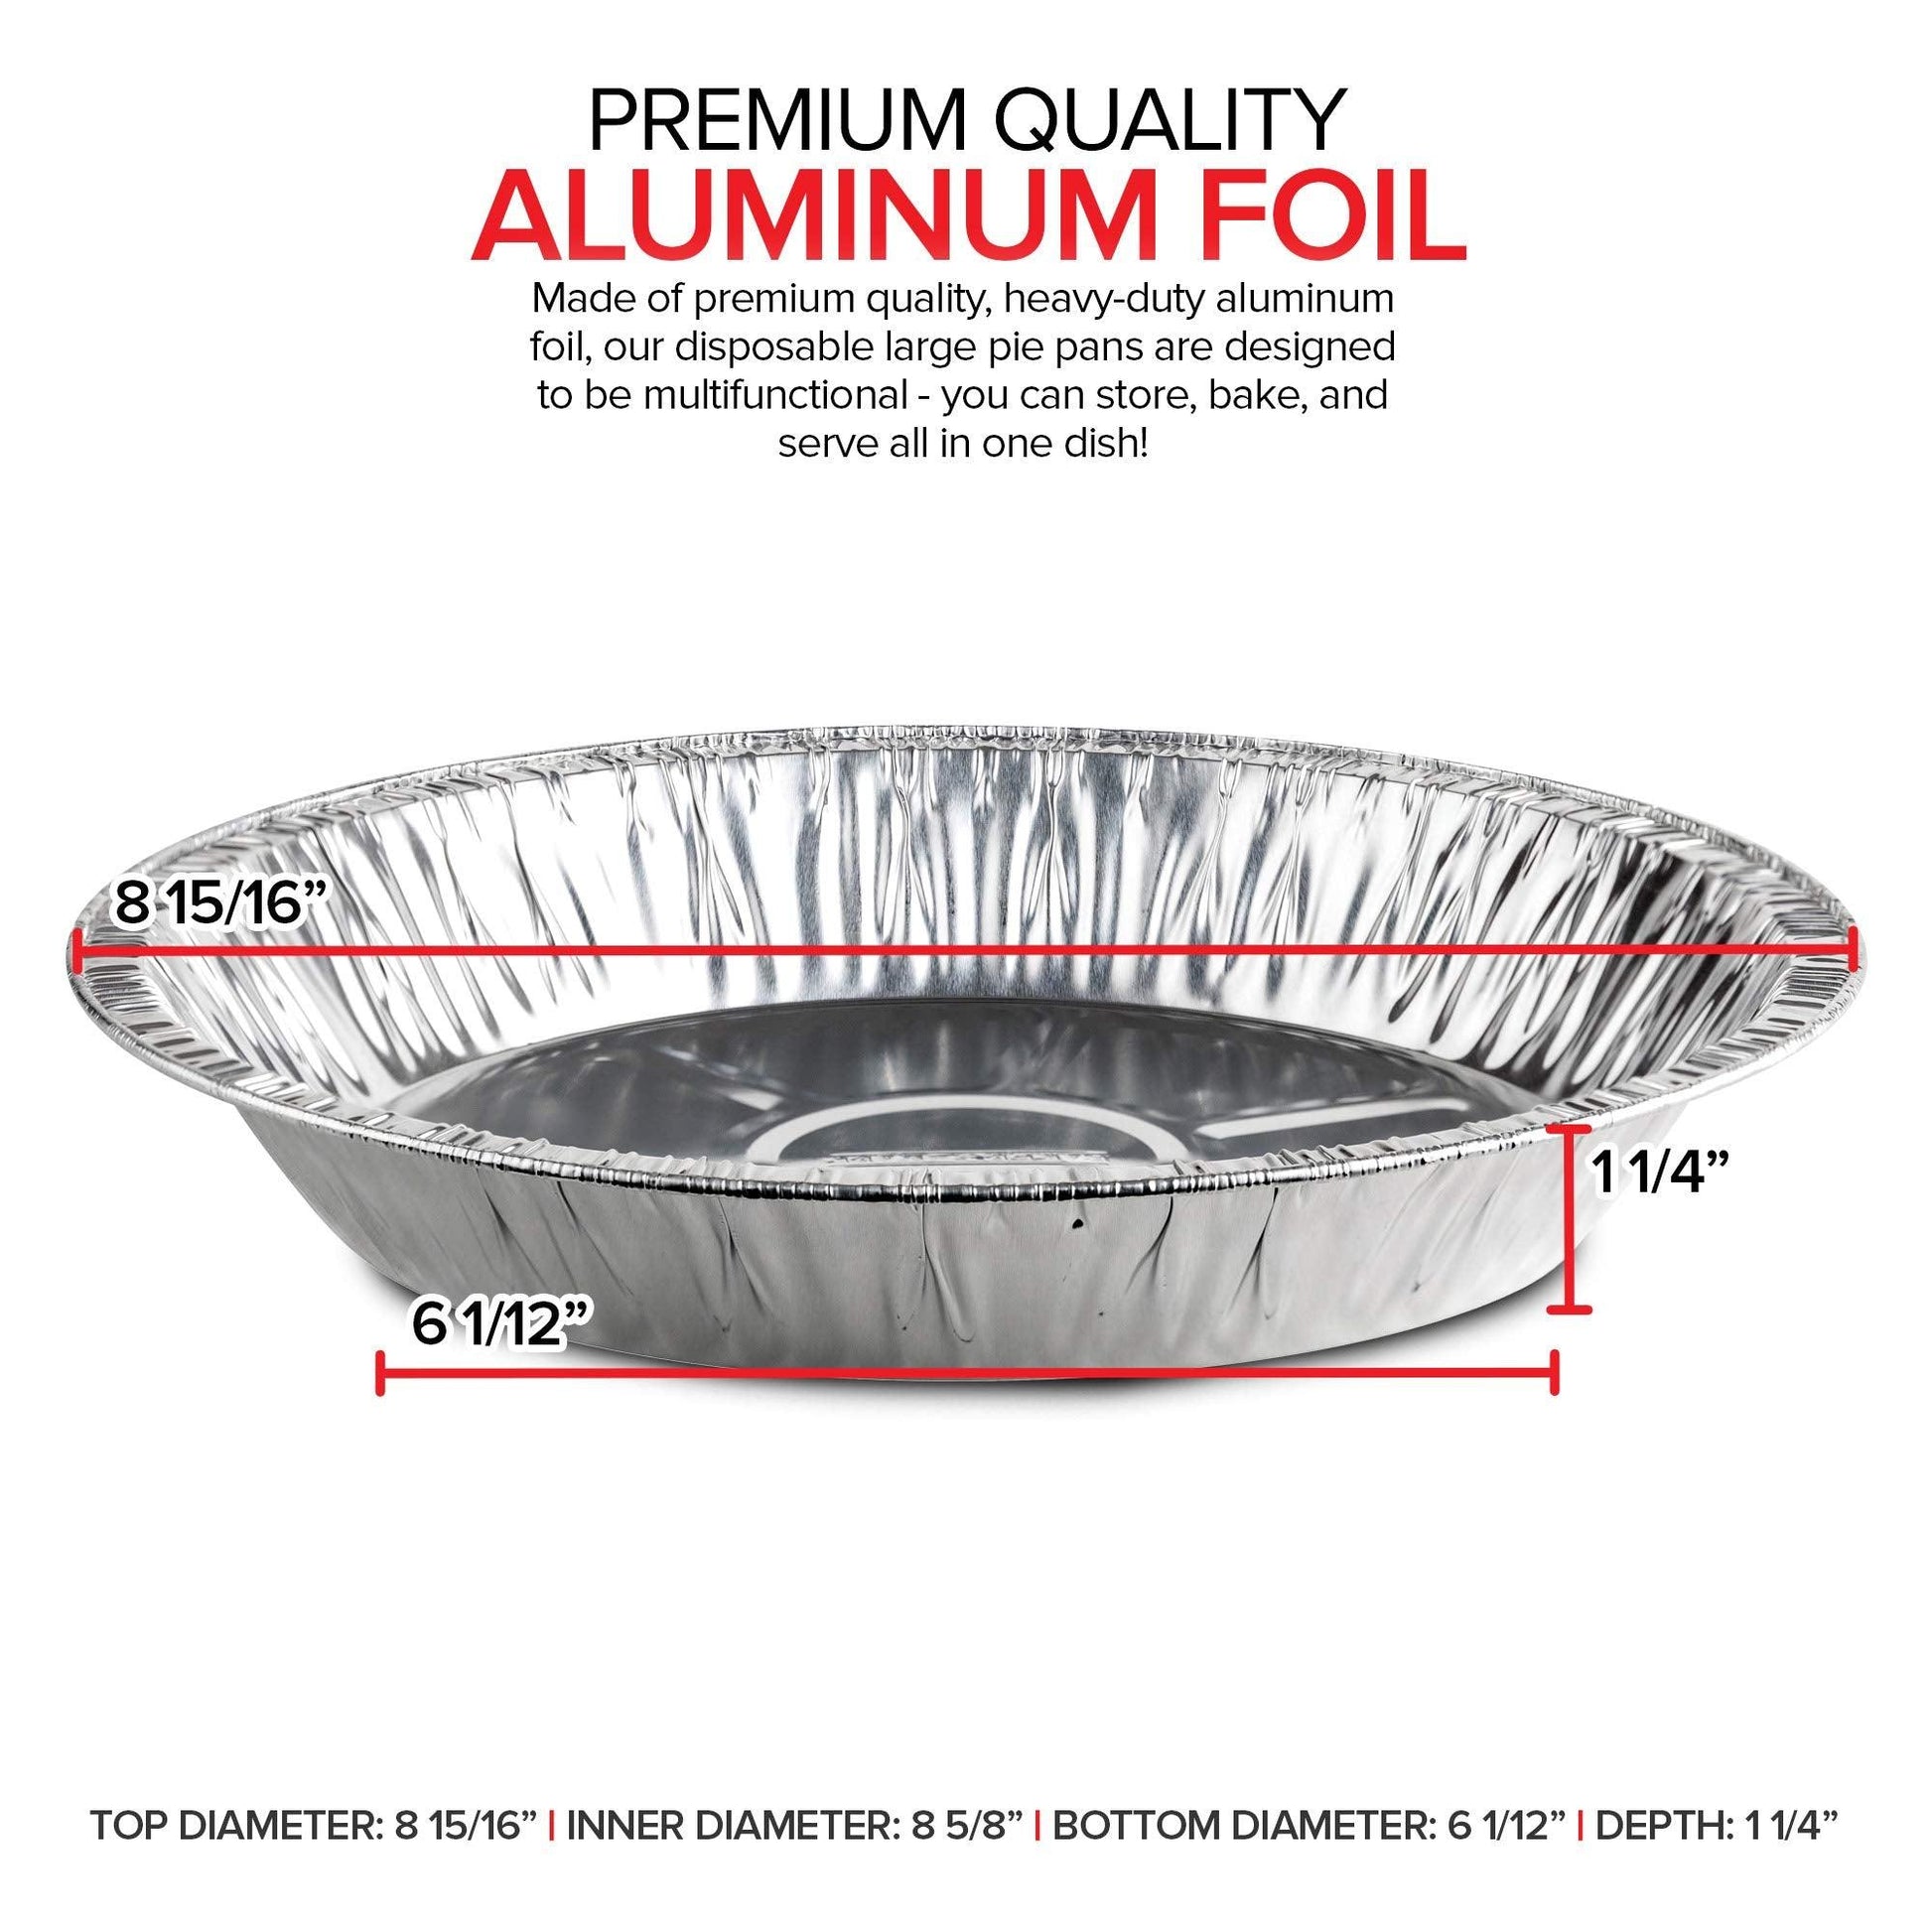 Stock Your Home 9 Inch Deep Dish Aluminum Foil Pie Pans (50 Count) - Disposable & Recyclable Large Pie Pan - Pie Plates for Bakeries, Cafes, Restaurants - Durable Large Foil Pans for Extra Pie Filling - CookCave